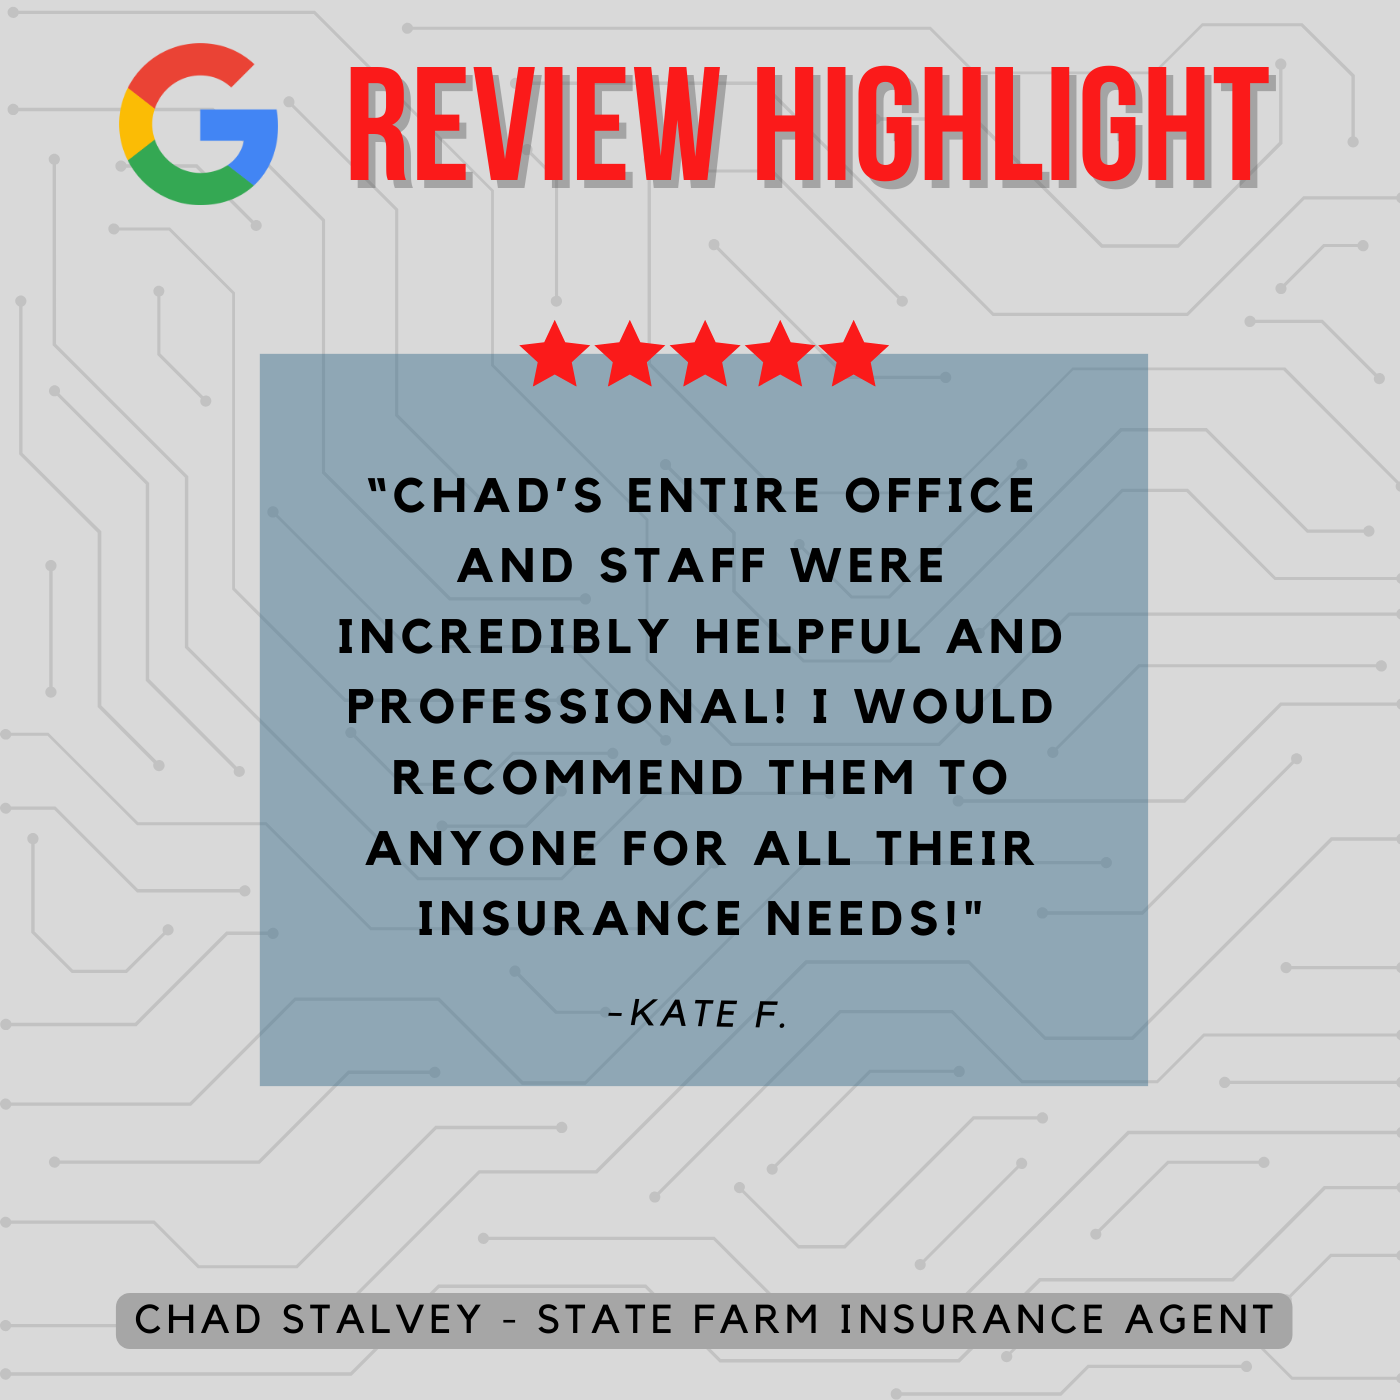 Chad Stalvey - State Farm Insurance Agent